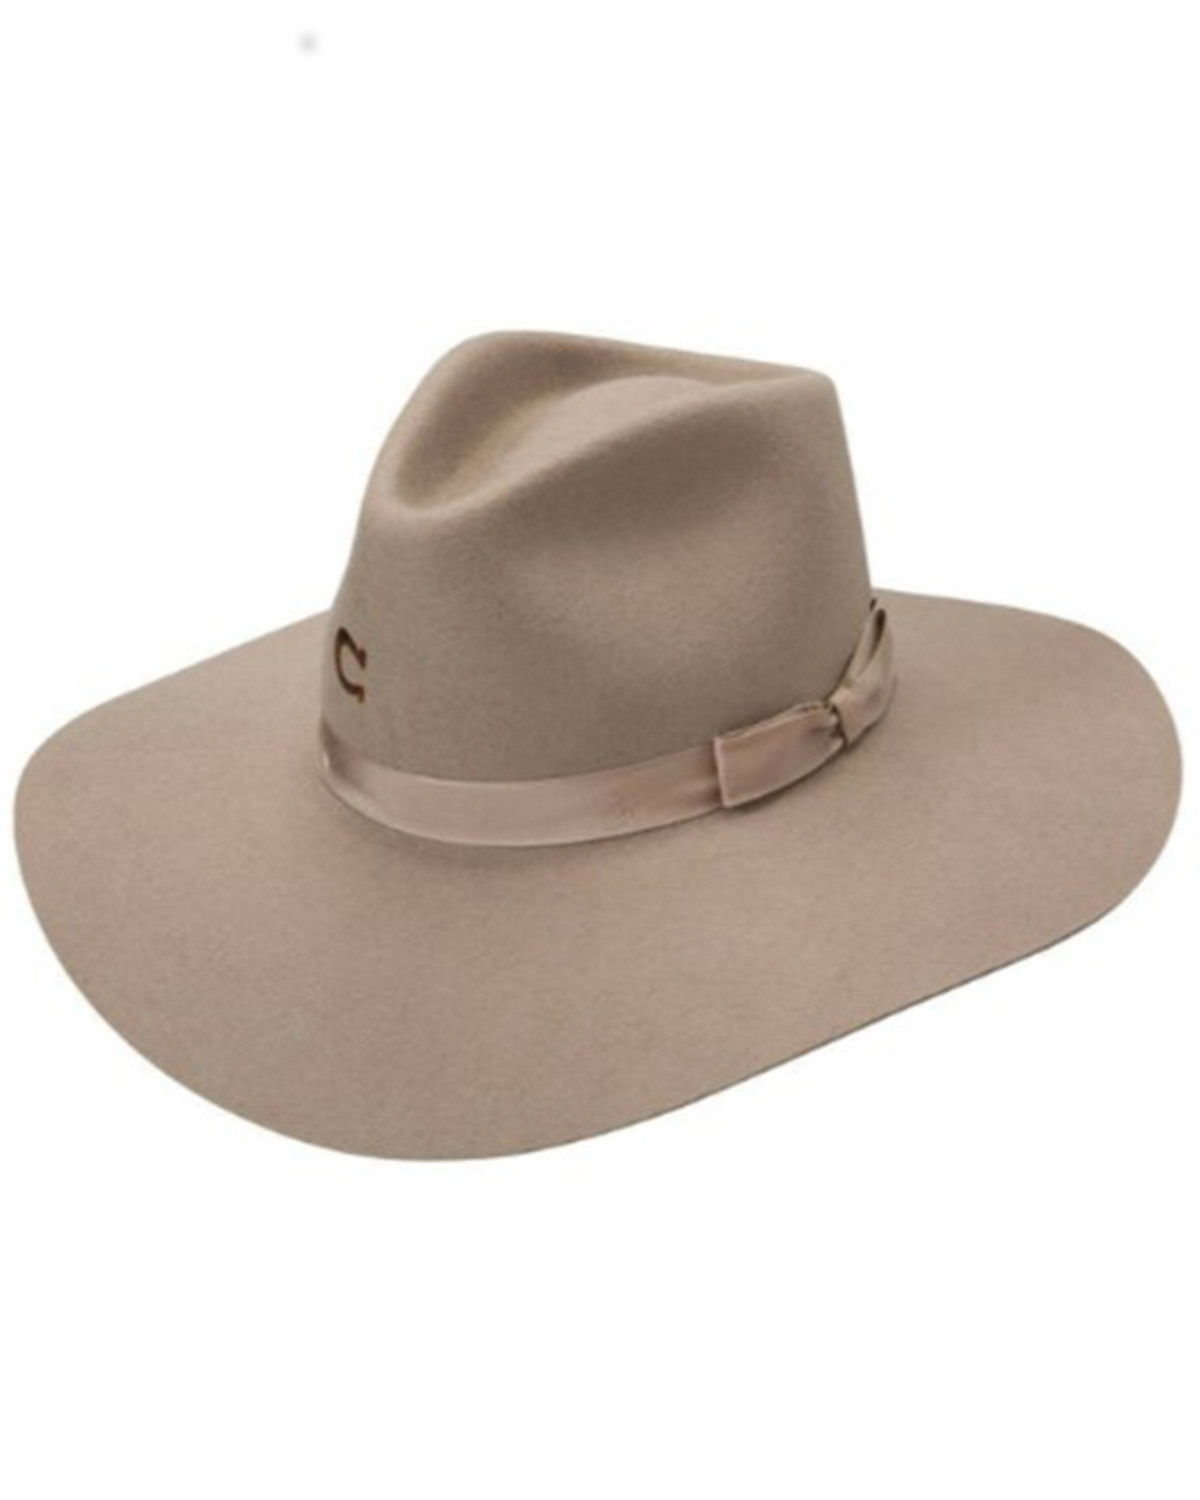 Charlie 1 Horse Women's The Highway Felt Western Fashion Hat